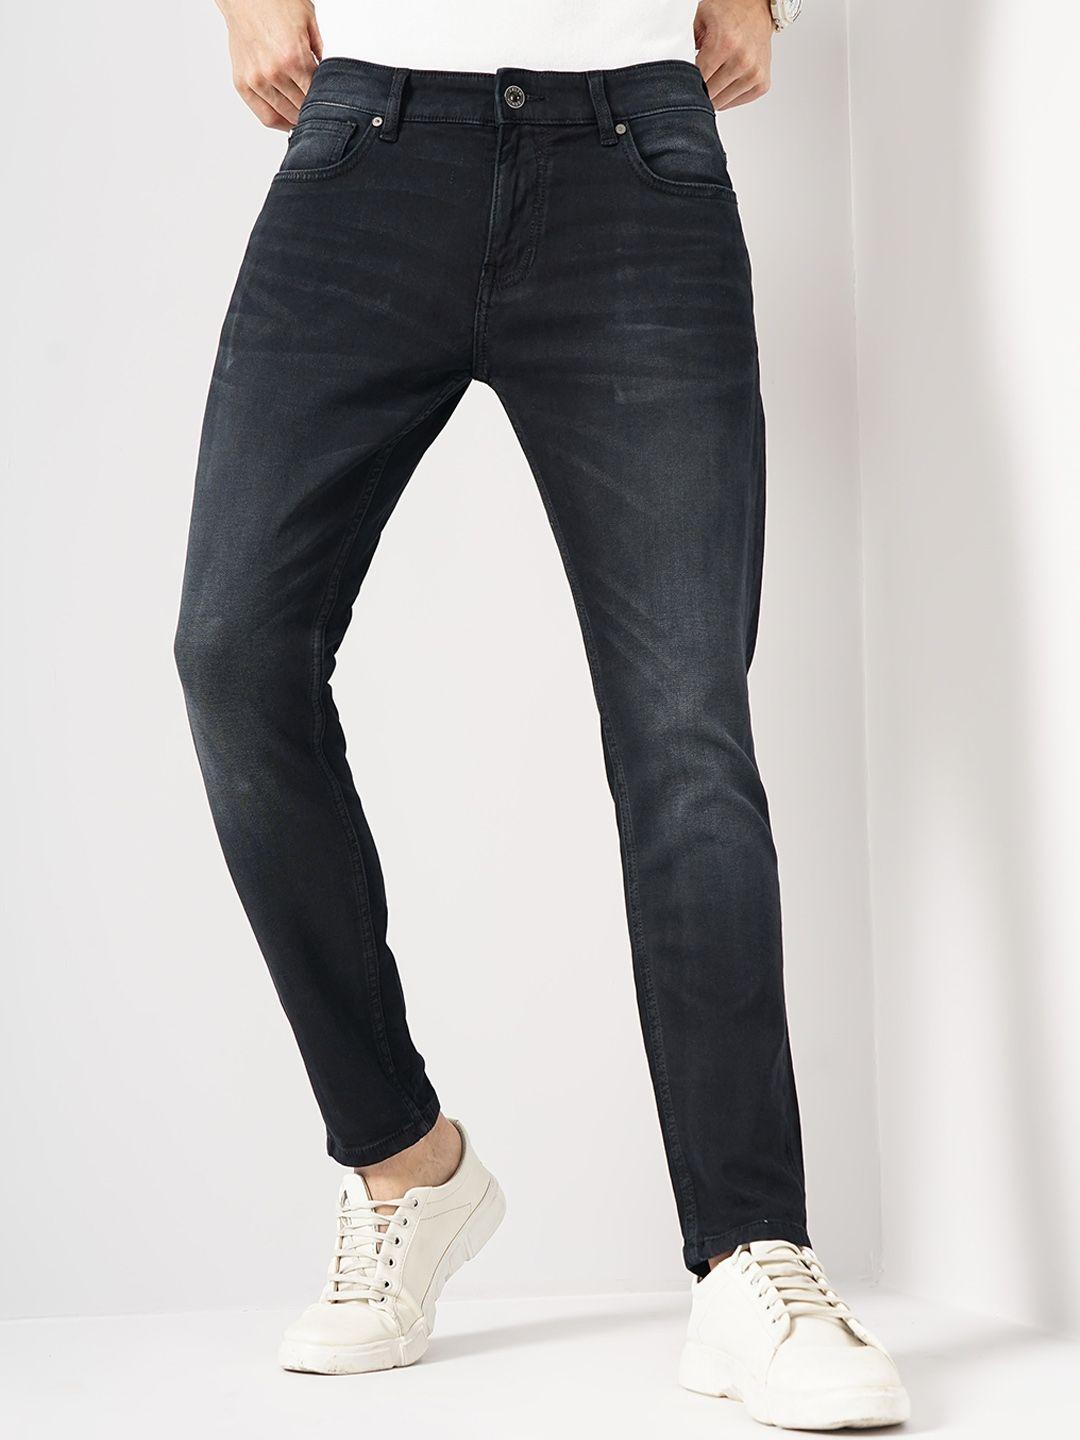 celio-men-jean-skinny-fit-light-fade-jeans